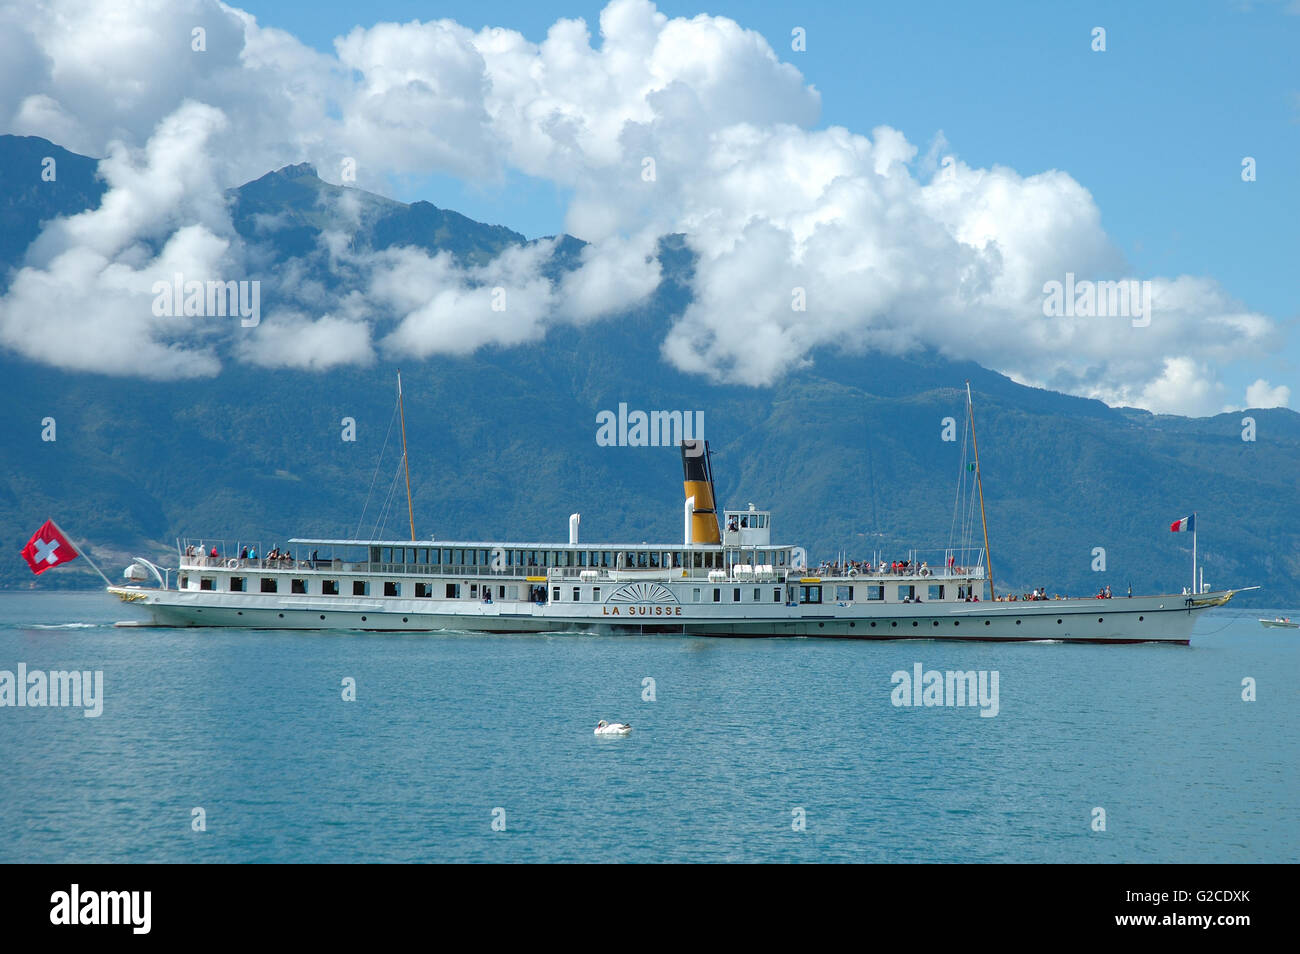 Vevey, Switzerland - August 16, 2014: Old Passenger ferry on Geneve lake in Switzerland. Unidentified people visible. Stock Photo